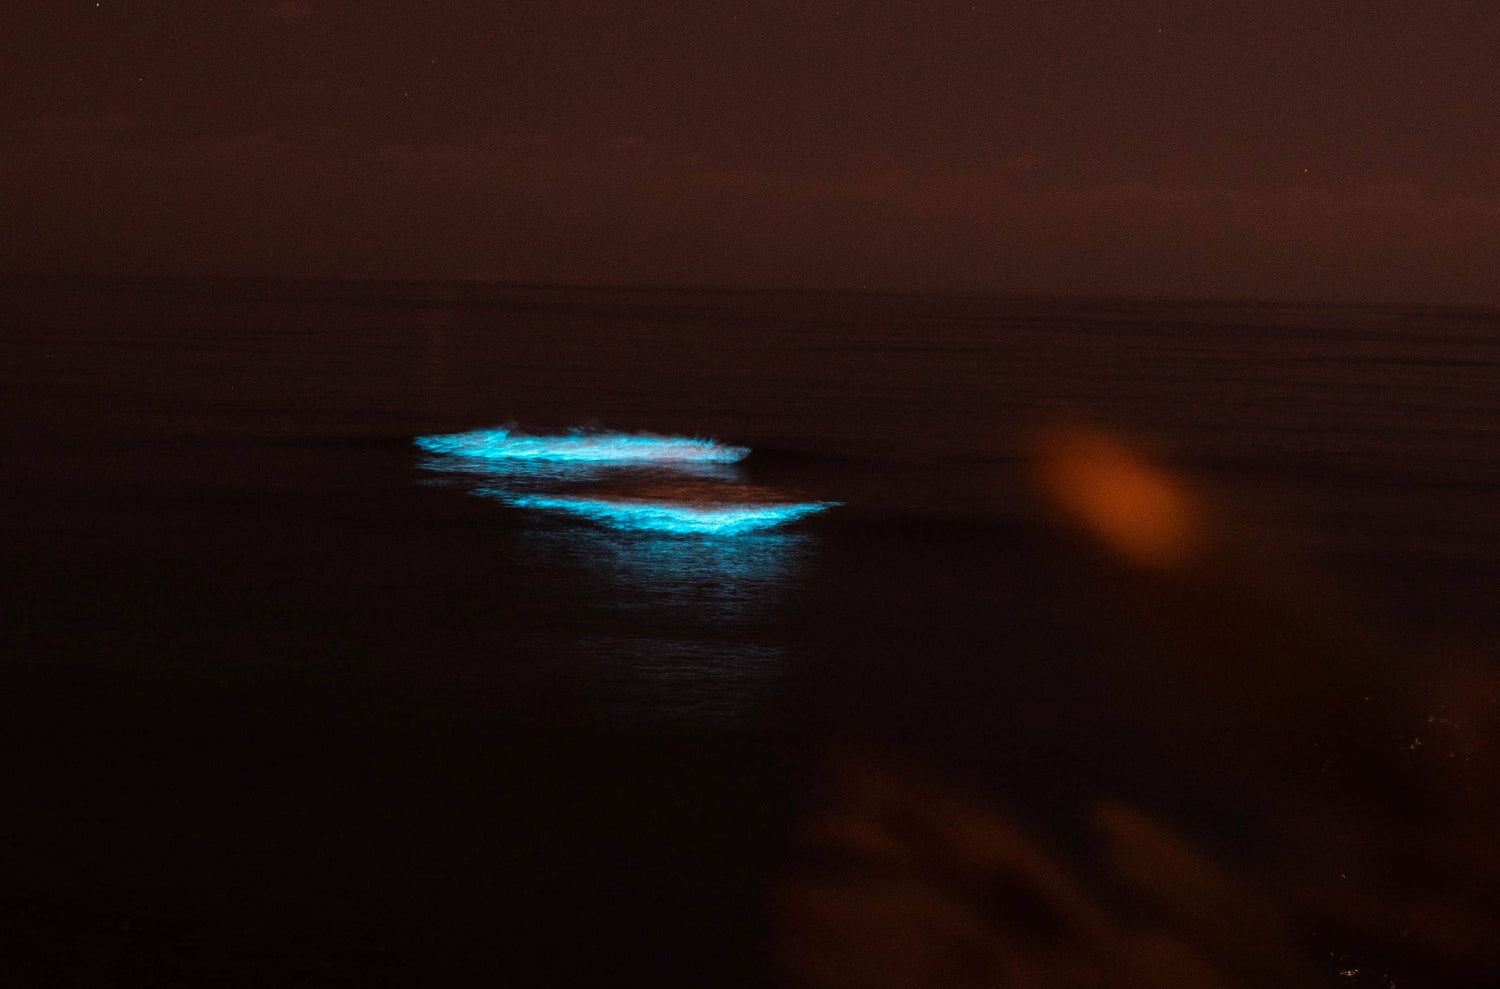 Lamp Rock Night Luminous Sea Float Electronic Glowing Accessories